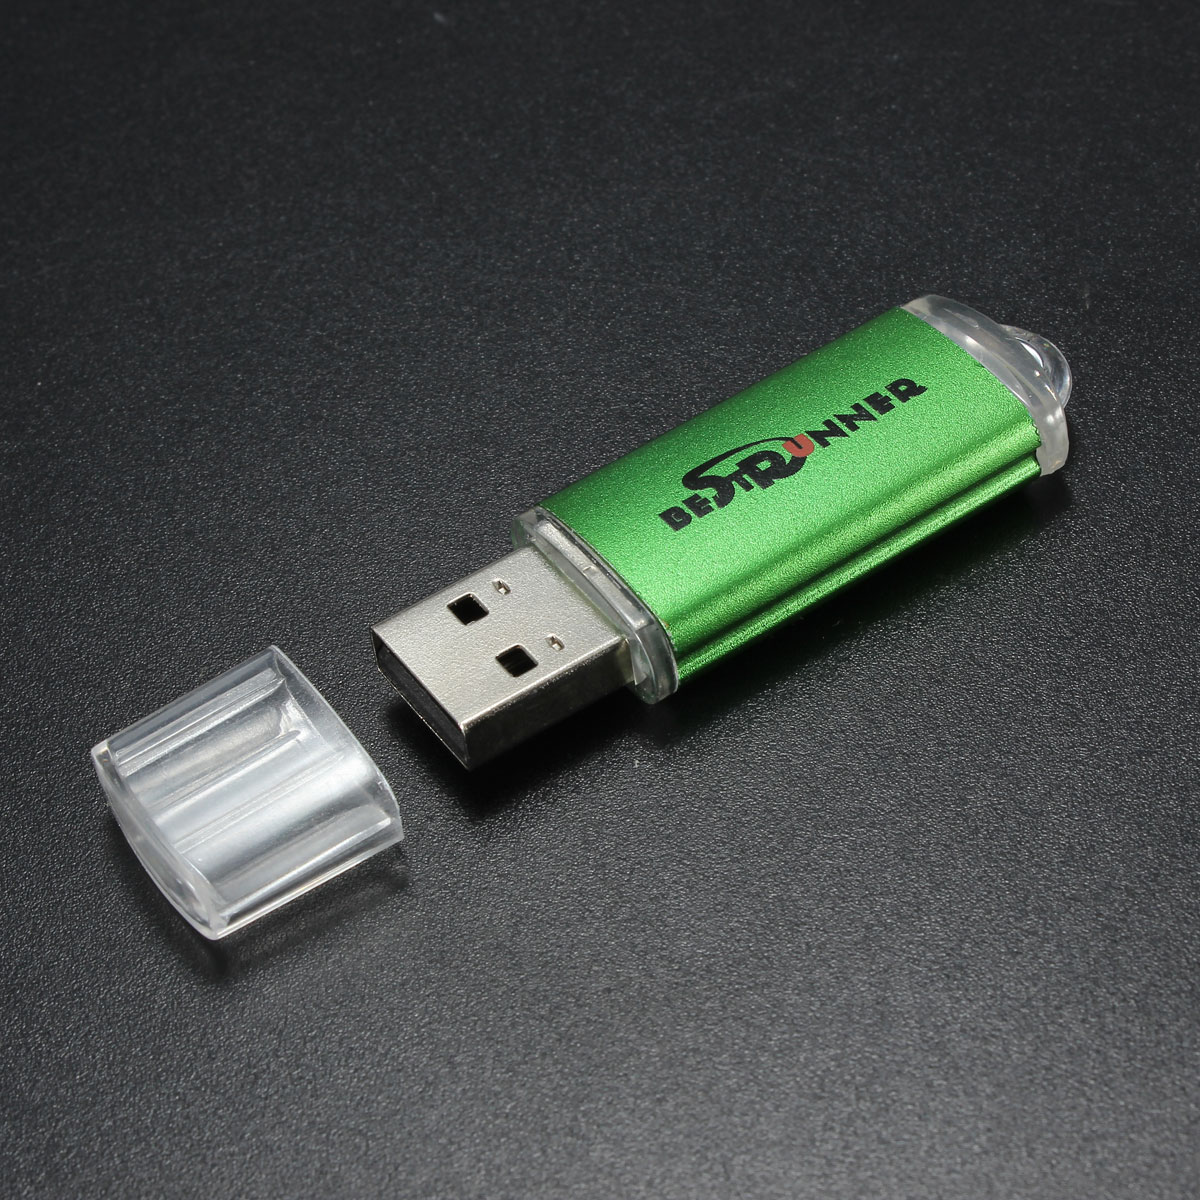 Bestrunner-Multi-Color-Portable-USB-20-1GB960M-Pendrive-USB-Disk-for-Macbook-Laptop-PC-1723018-13